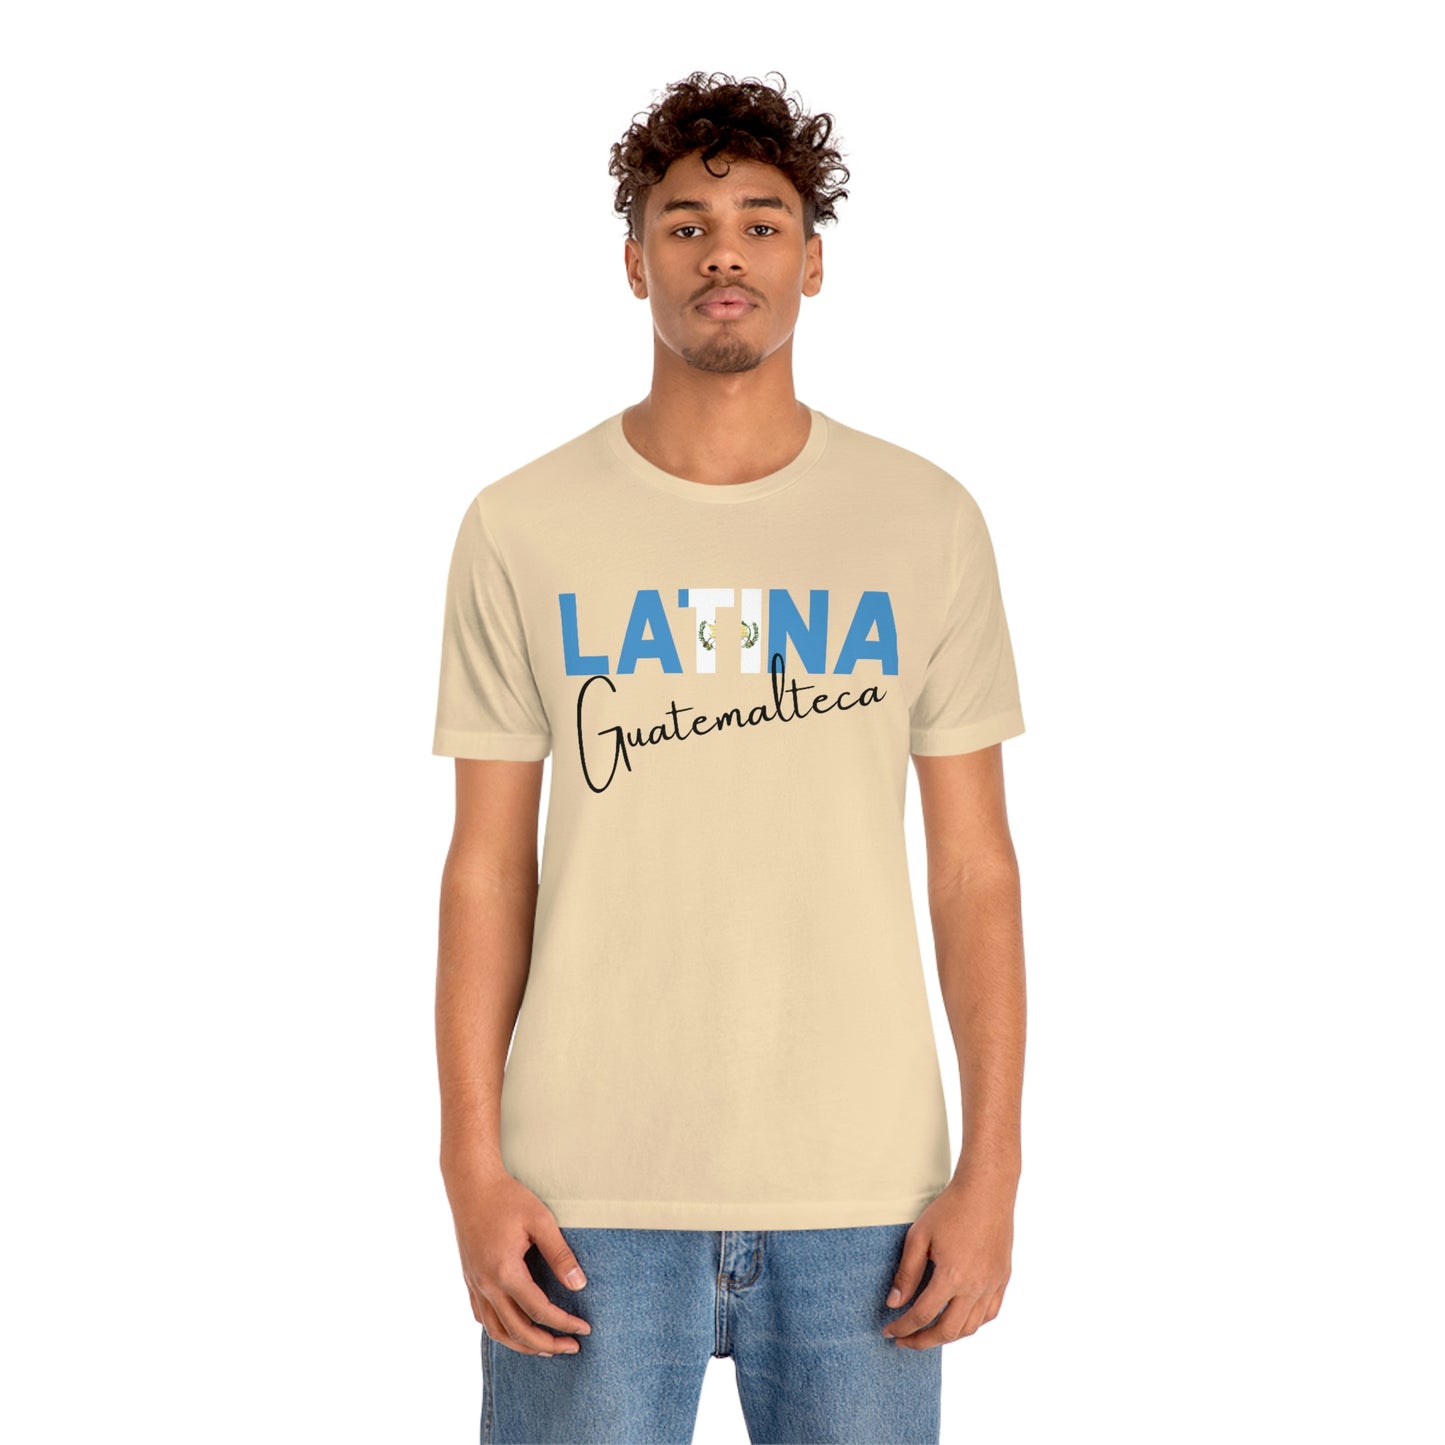 Latina Guatemalteca, Shirt